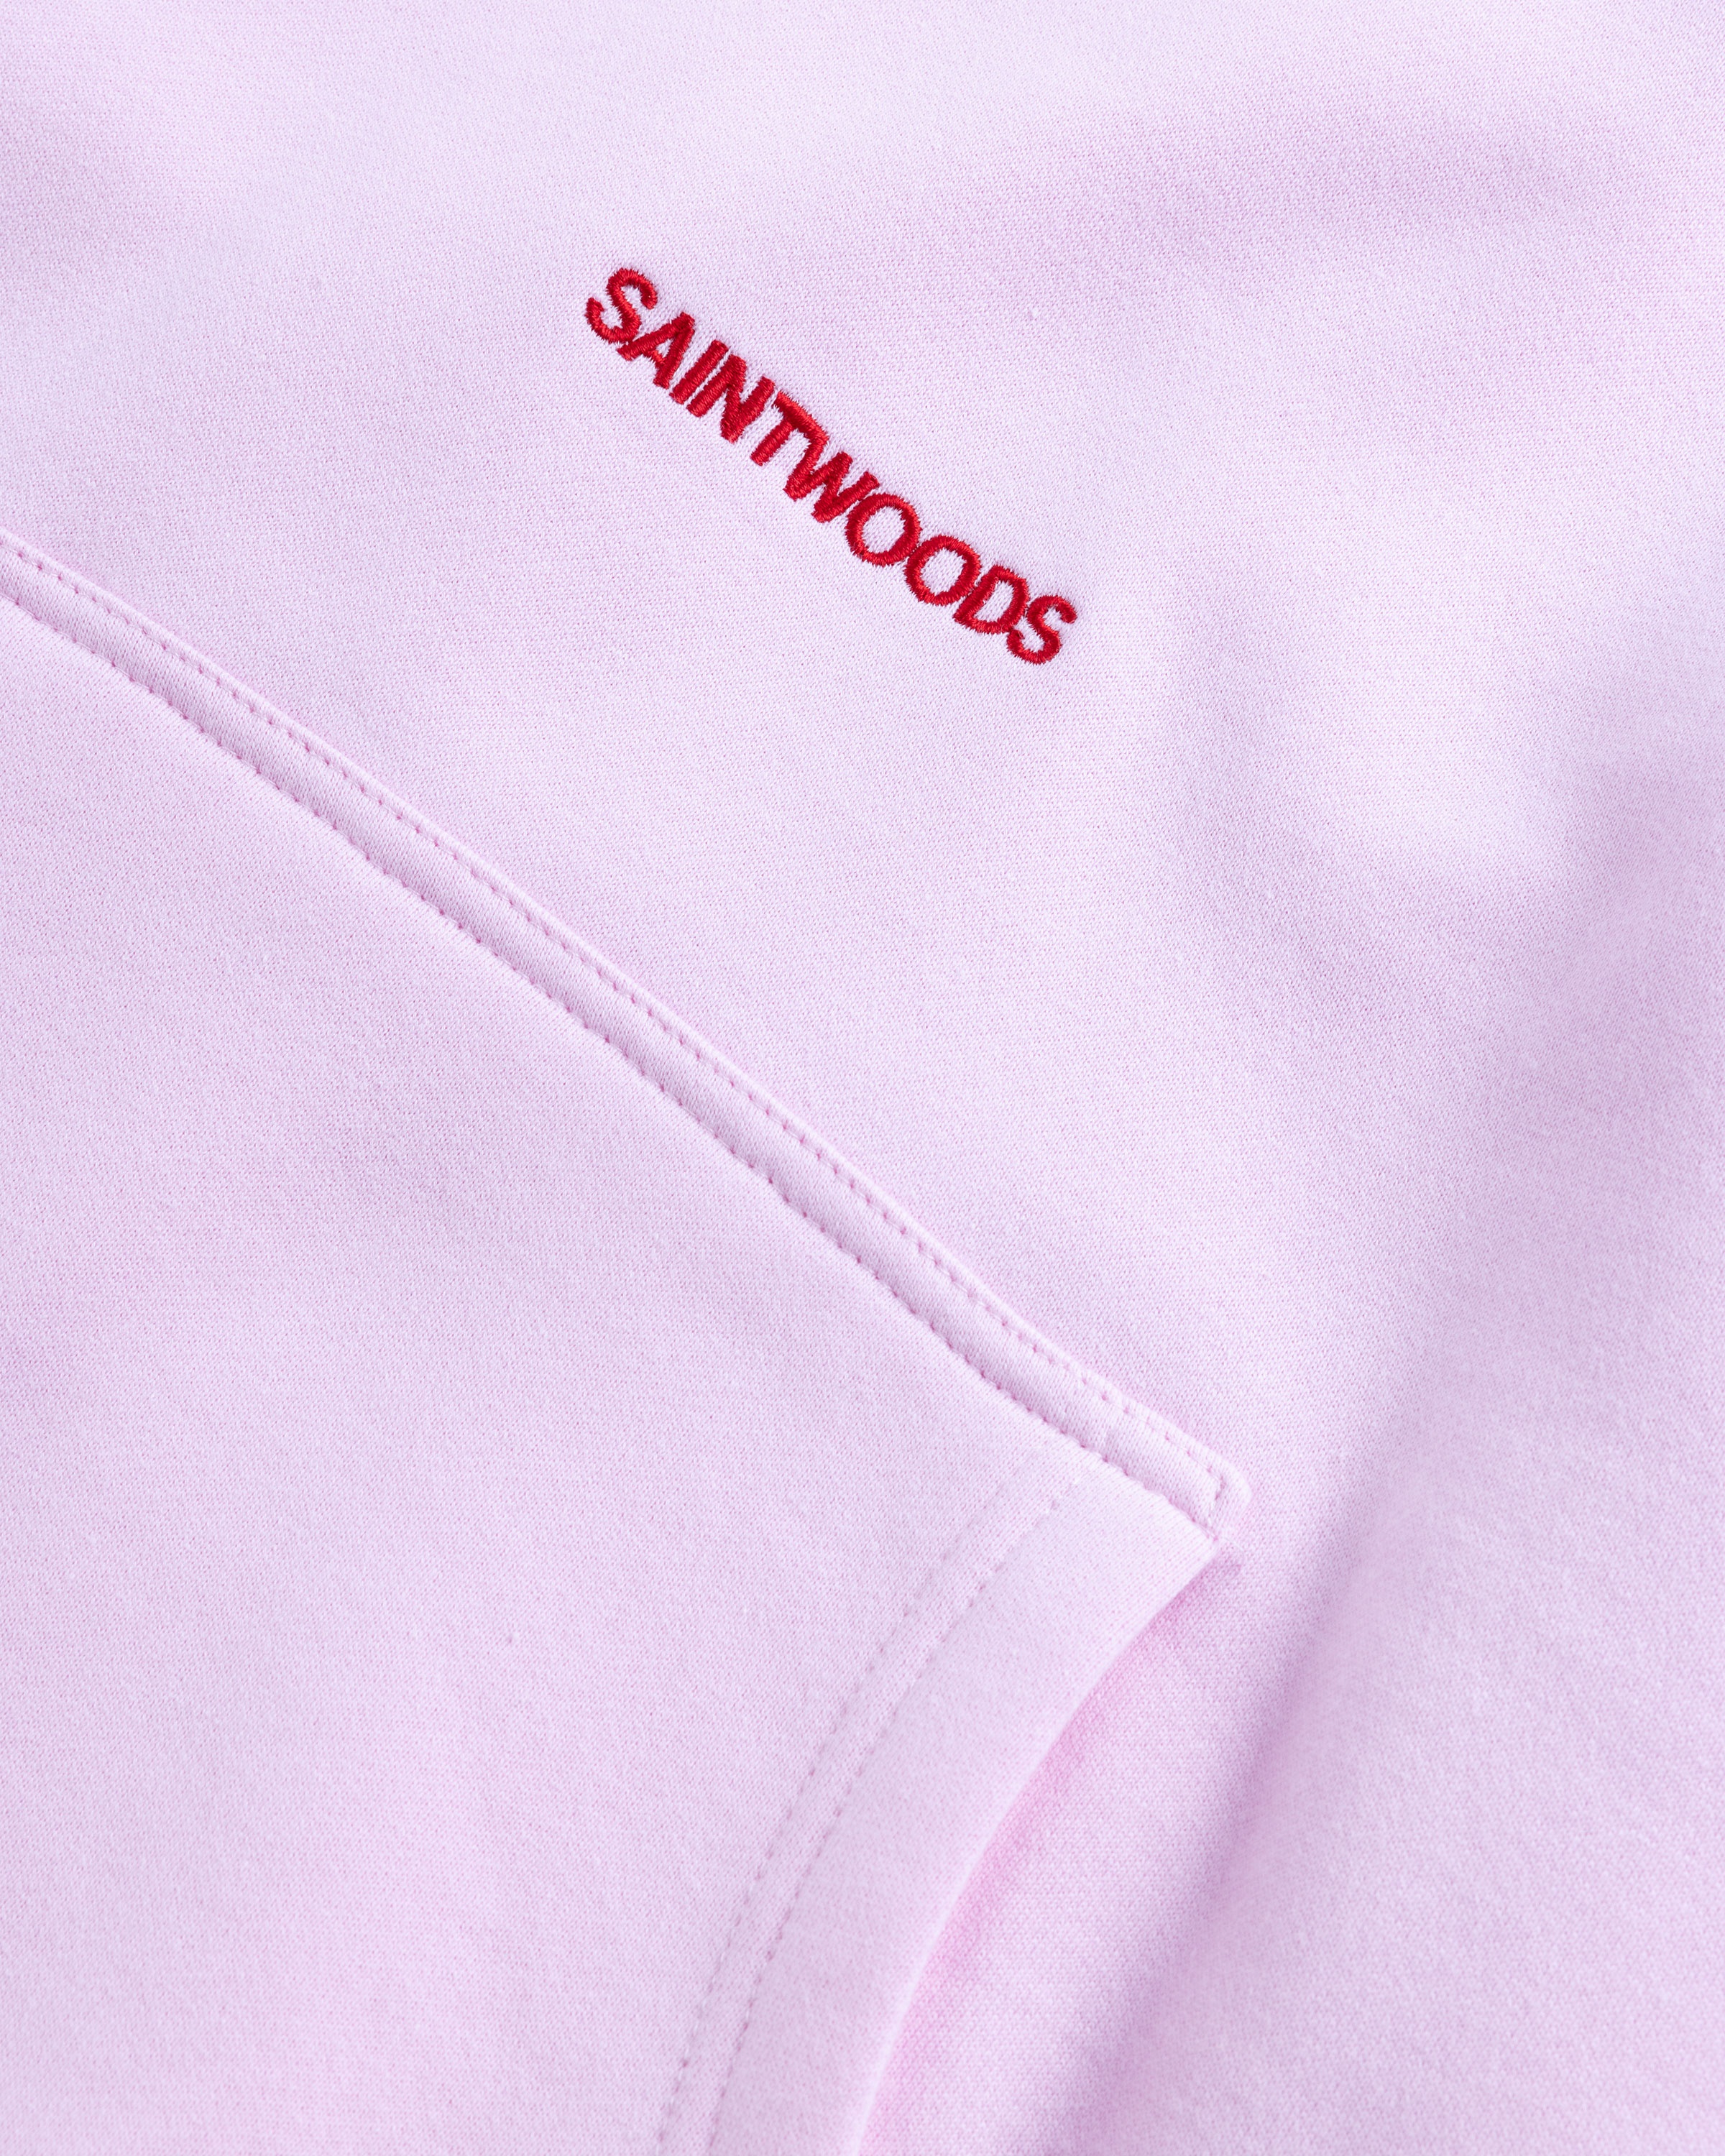 Saintwoods – SW Logo Hoodie Pink